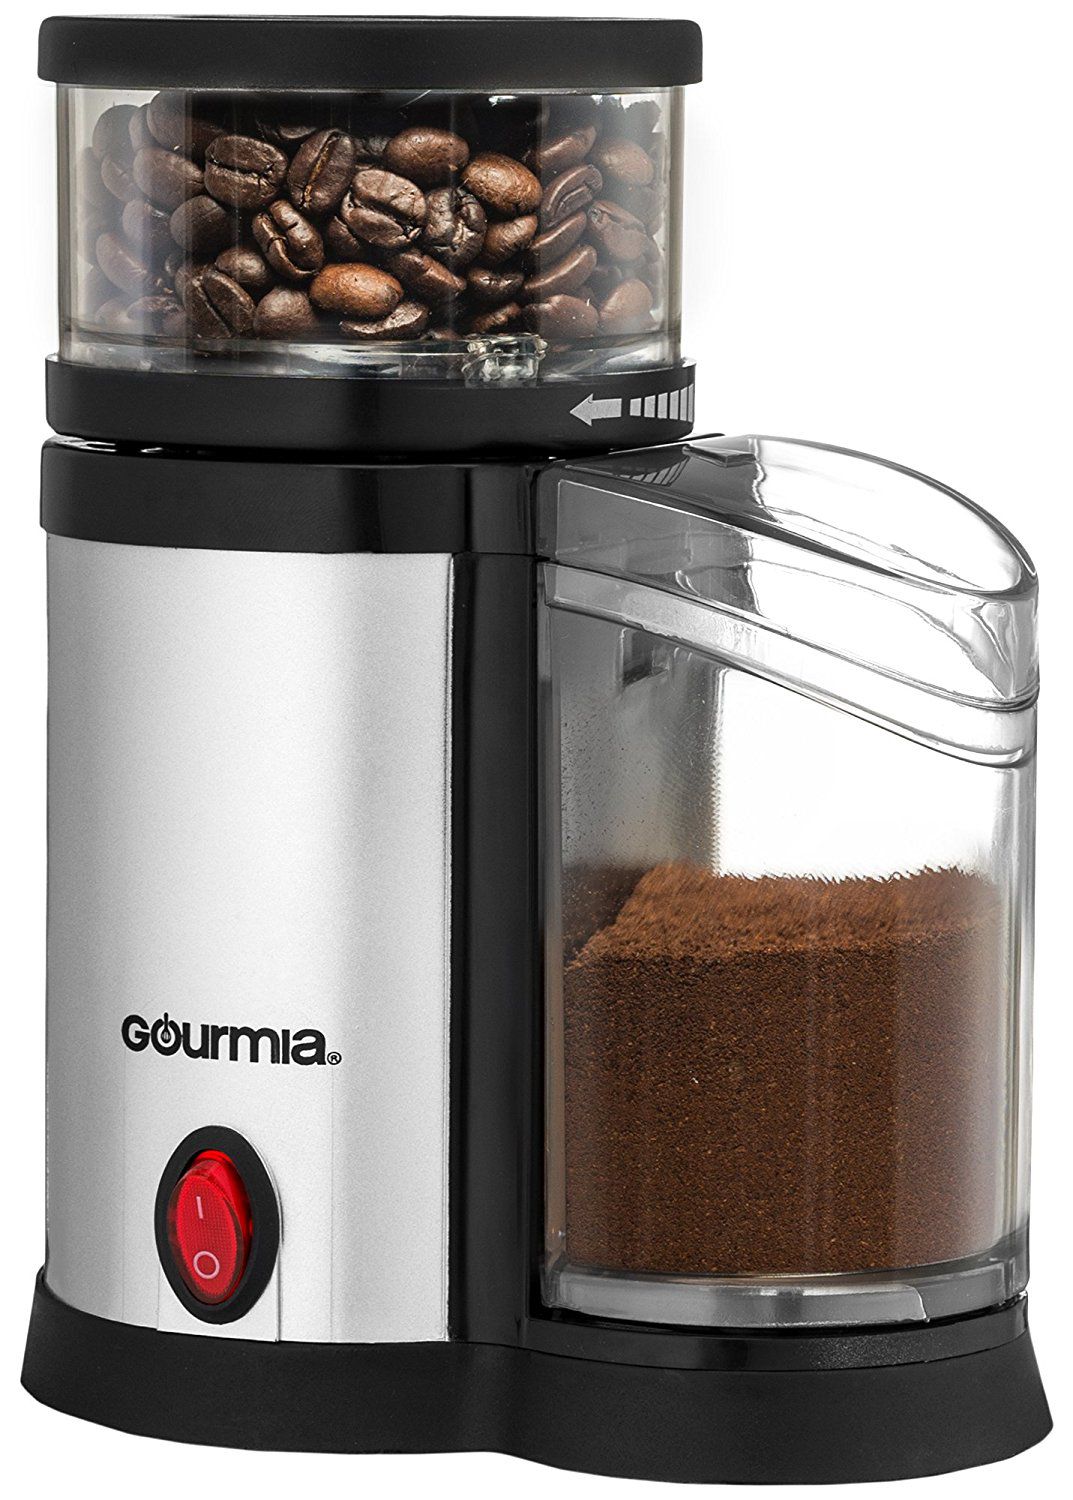 Gourmia Compact Electric Burr Coffee Grinder